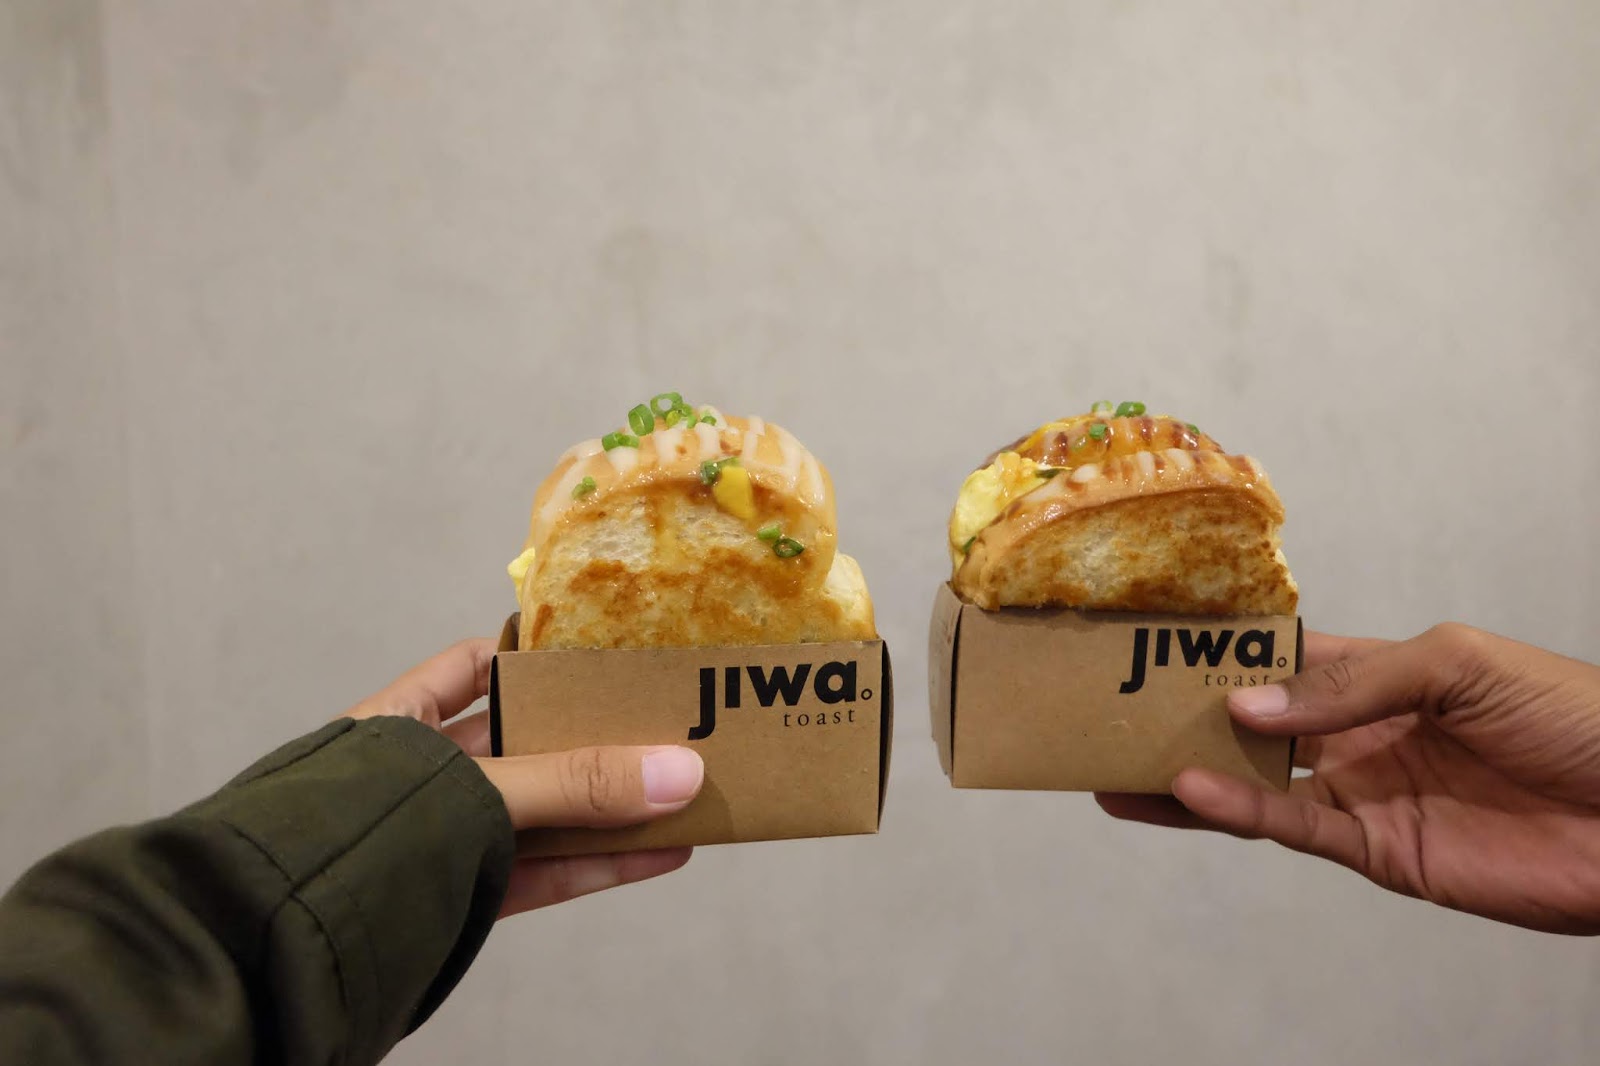 [EAT] JANJI JIWA & JIWA TOAST, GADING MEDITERANIA - Another Diary